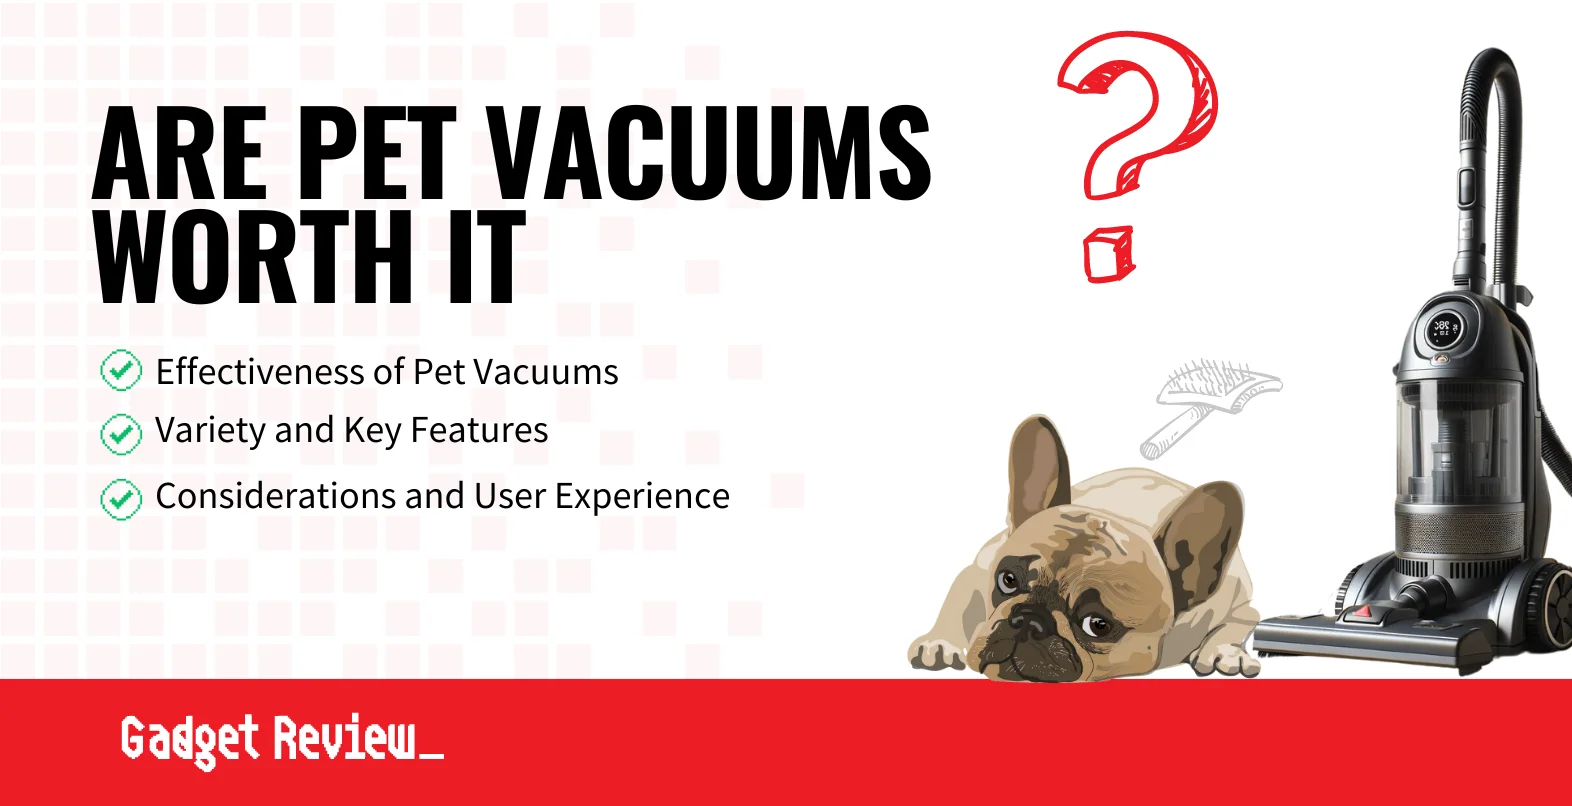 Are Pet Vacuums Worth It?